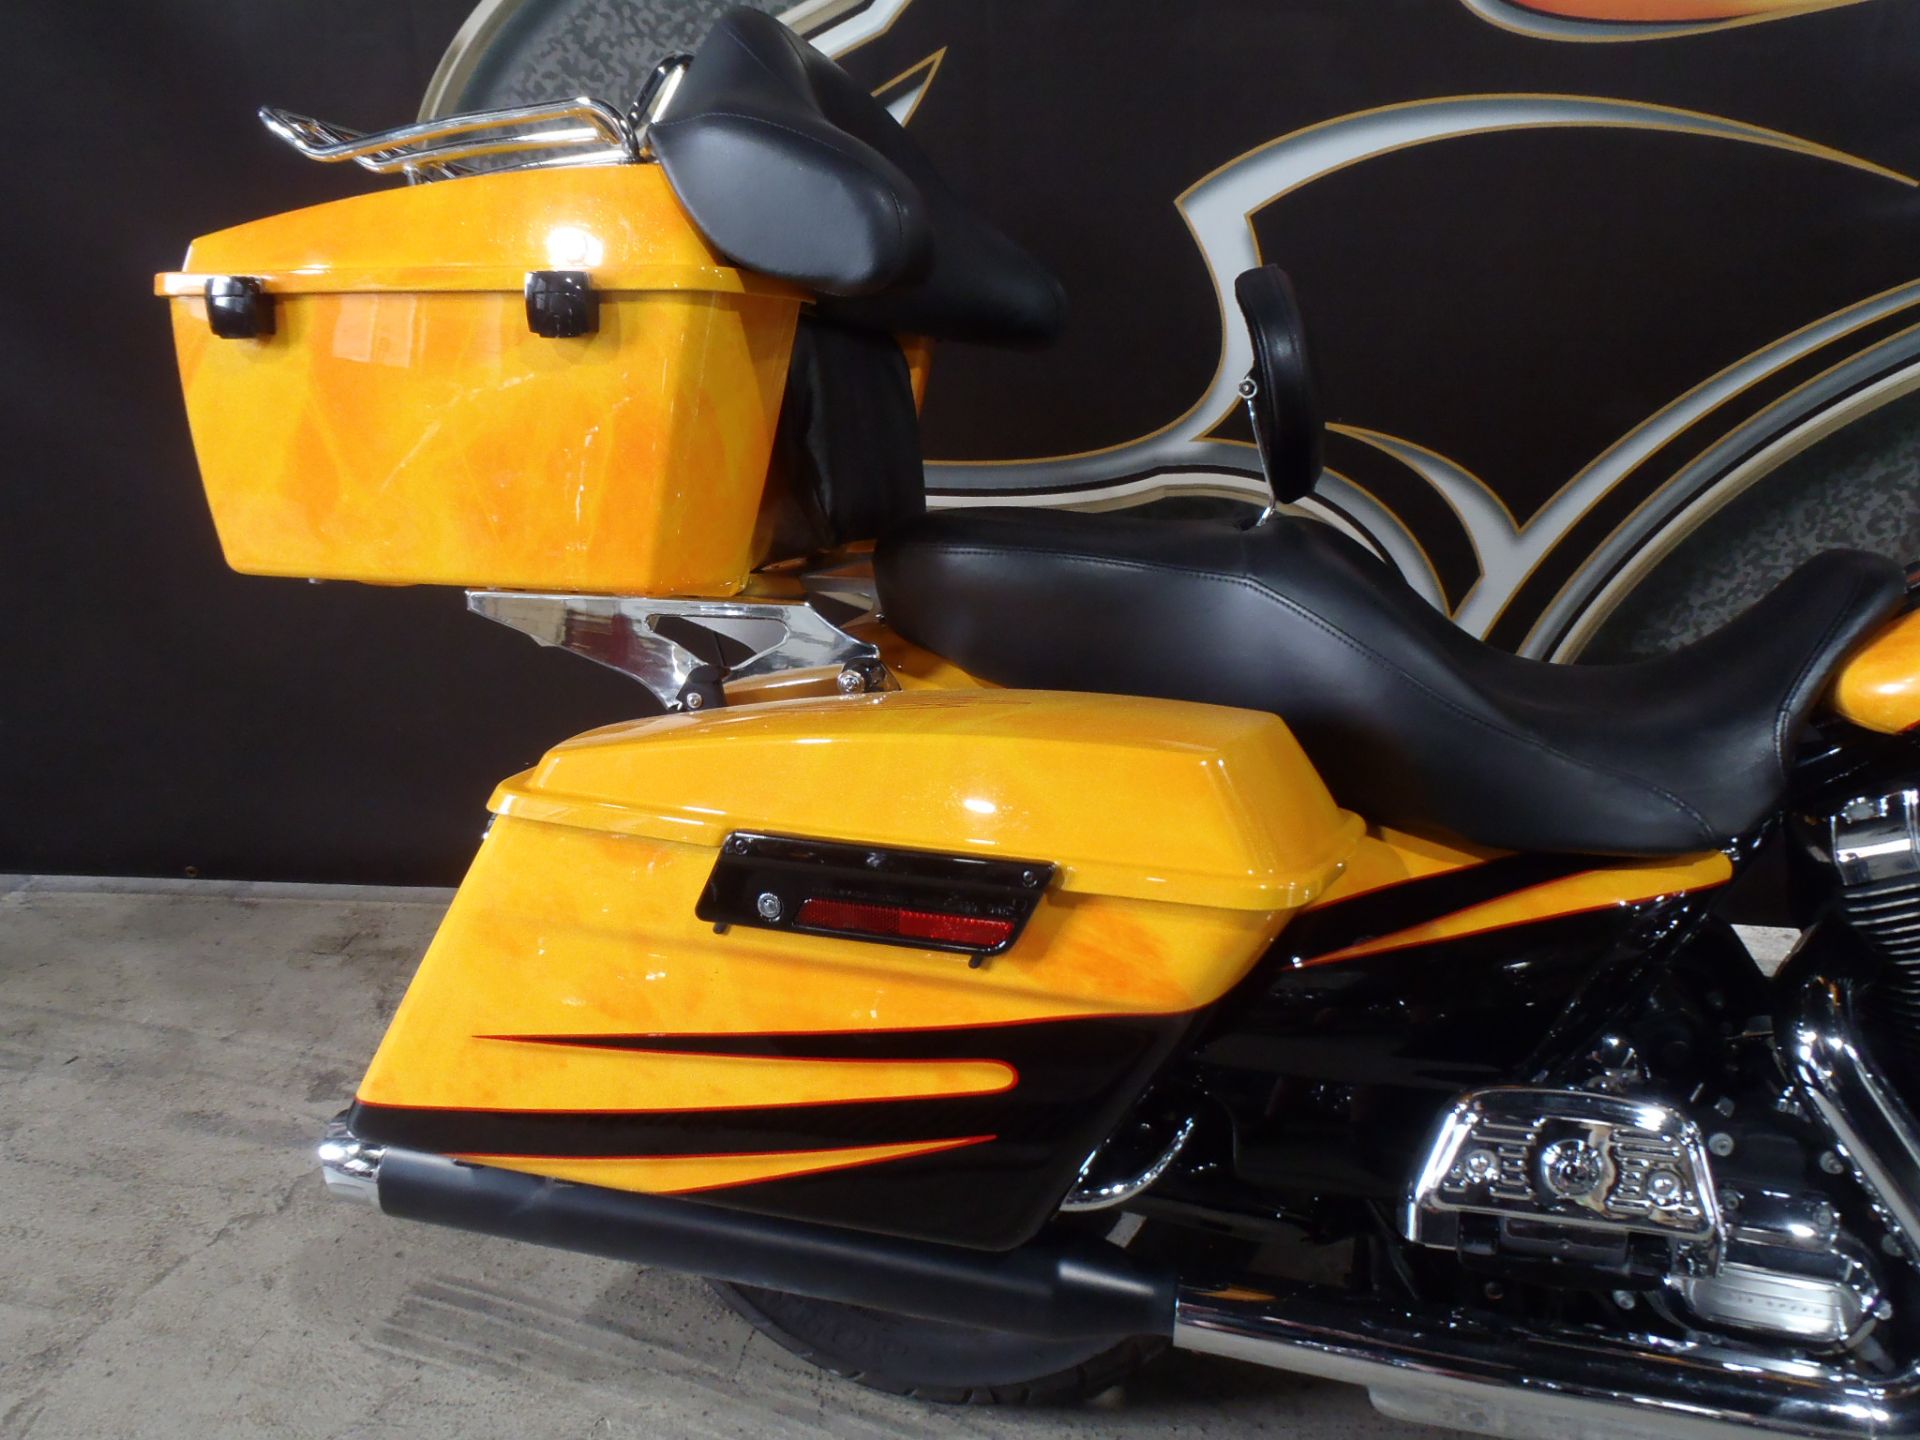 2011 Harley-Davidson Road Glide® Custom in South Saint Paul, Minnesota - Photo 6